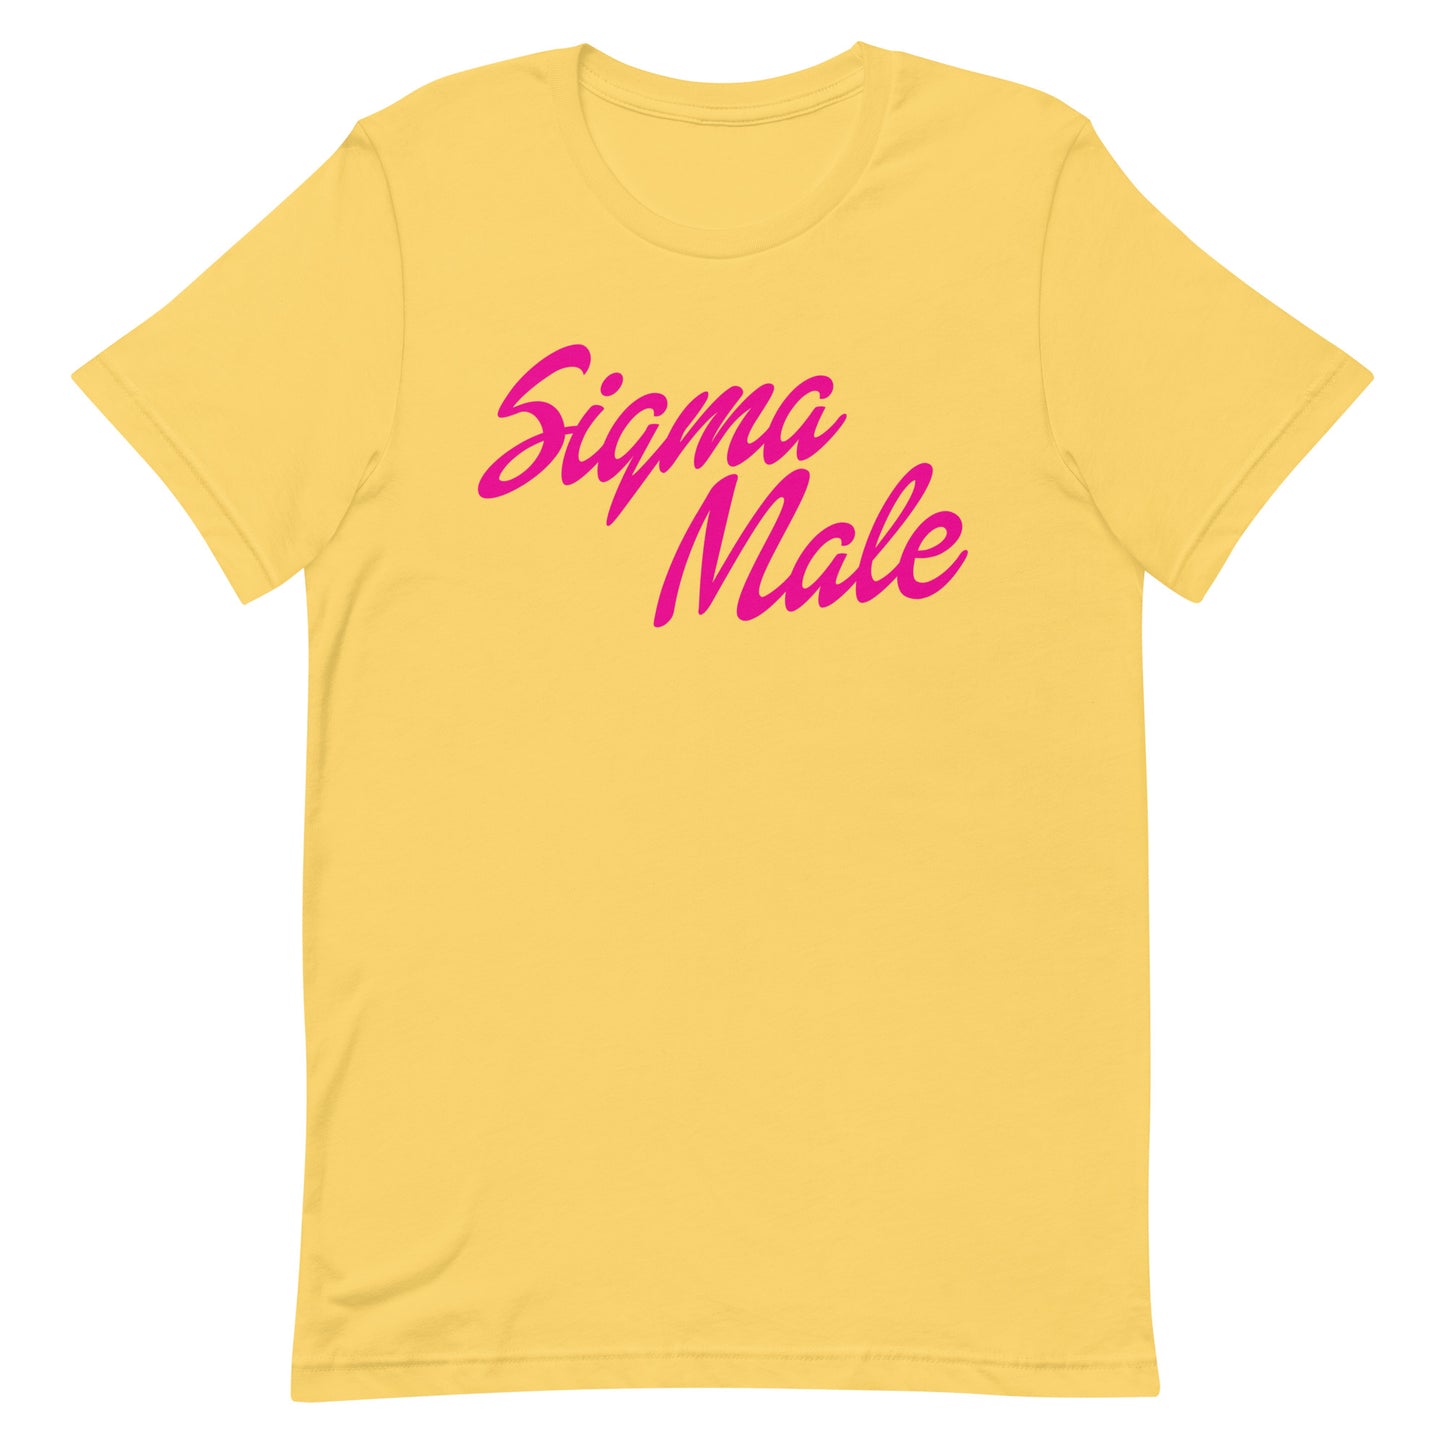 Sigma Male Unisex t-shirt